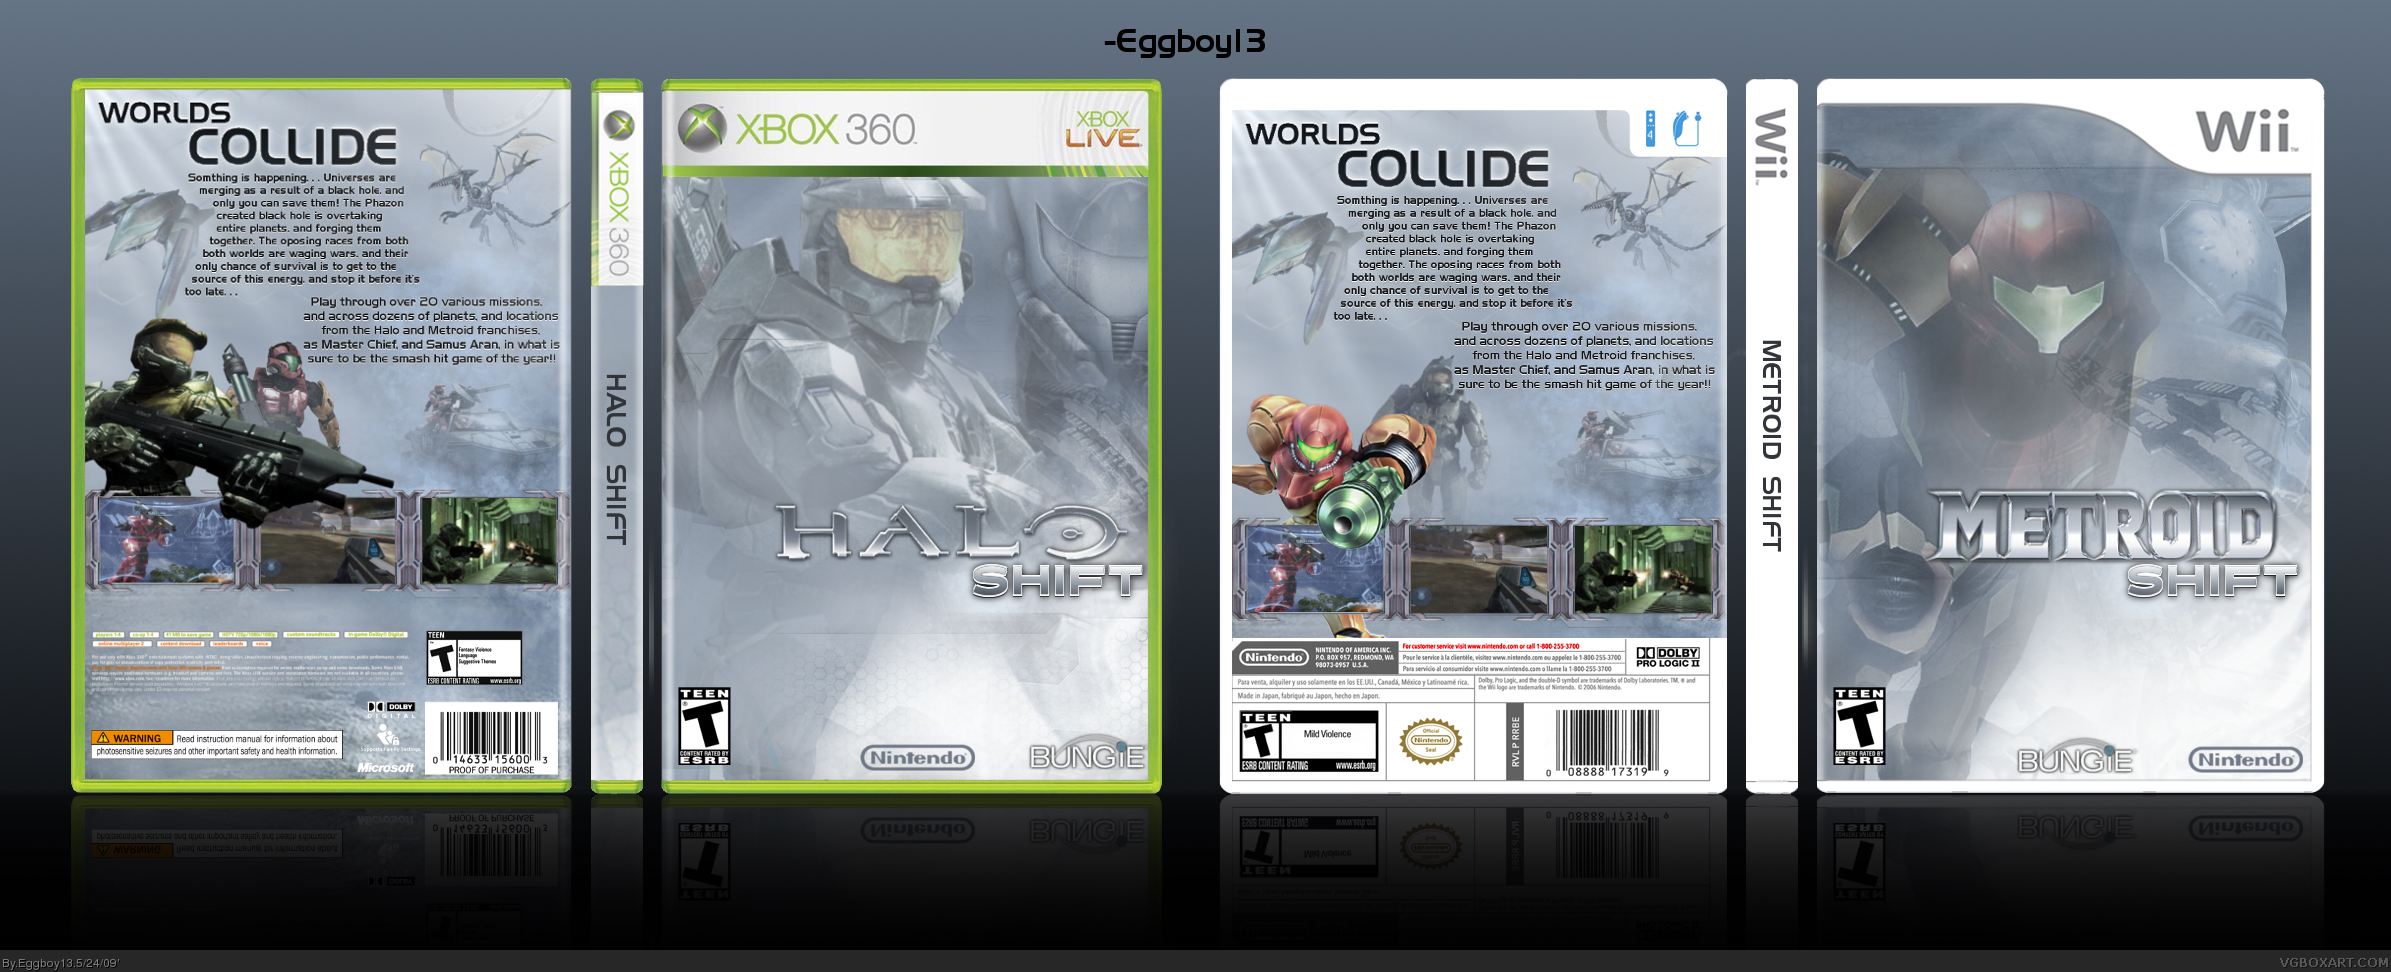 Metroid Shift (Wii) -- Halo Shift (360) box cover